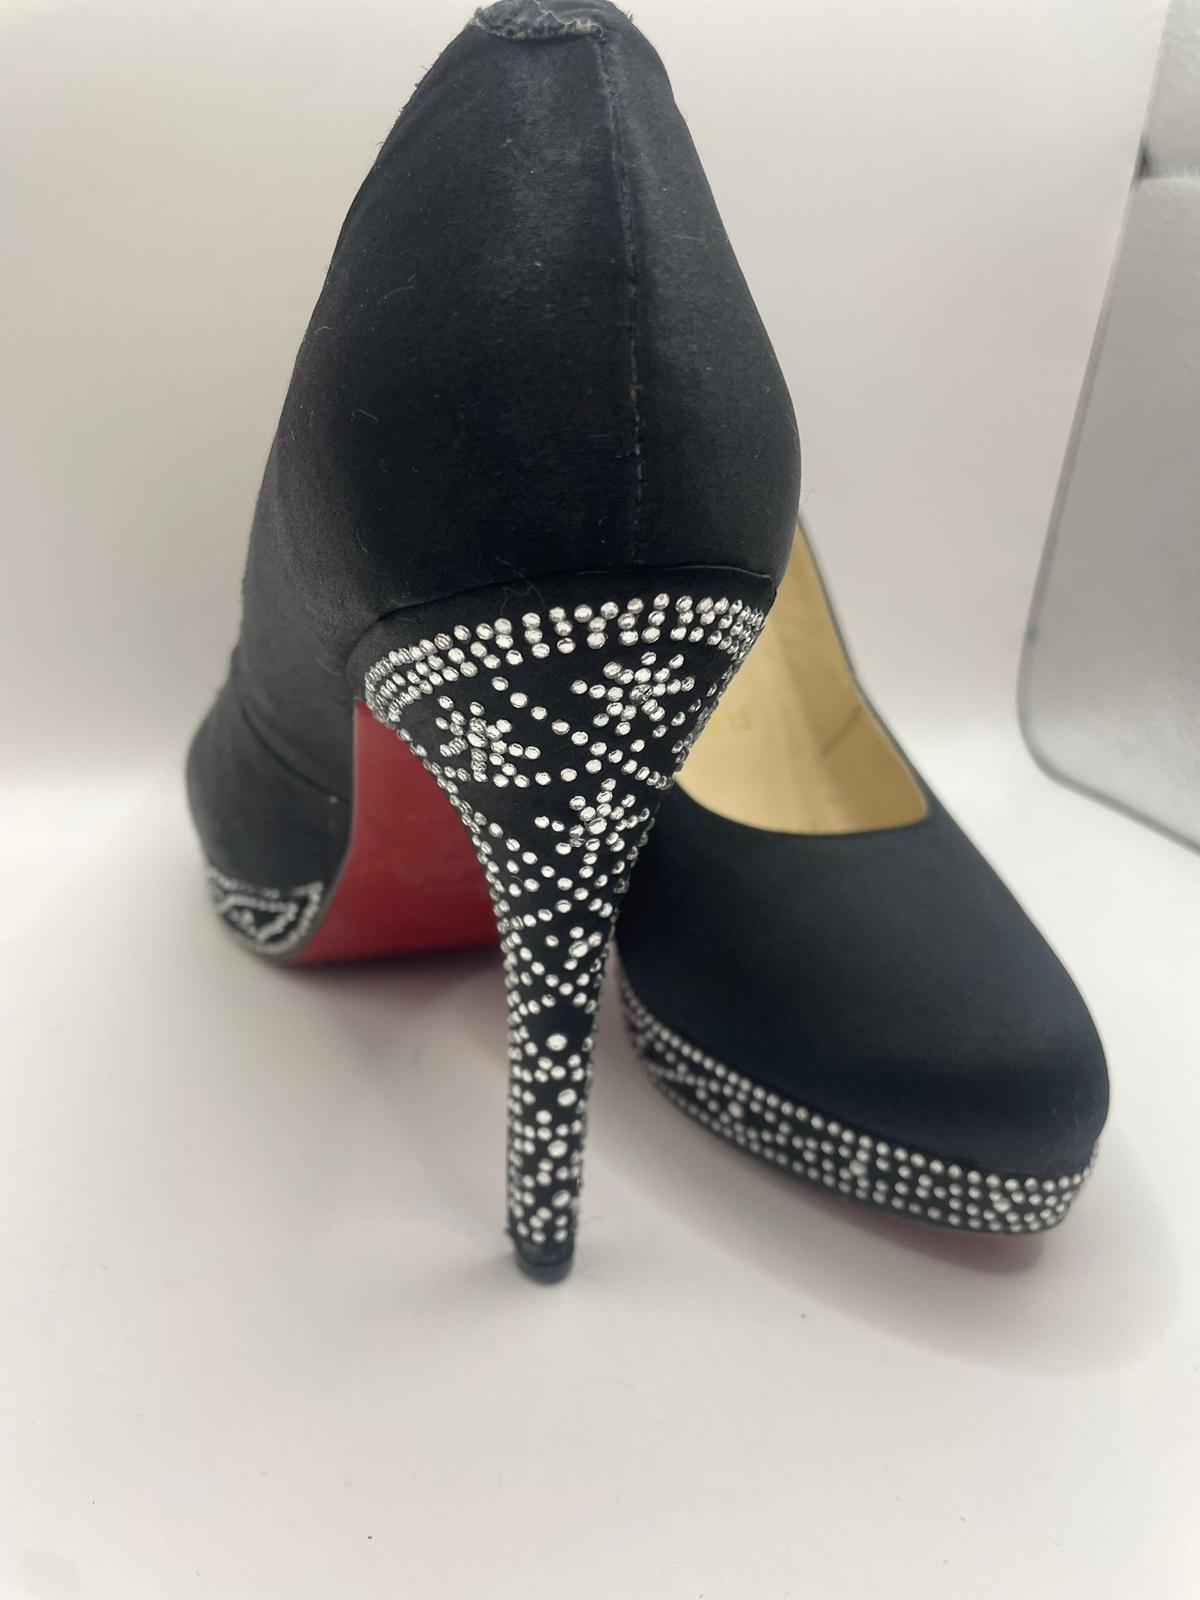 Christian Louboutin heels size 39